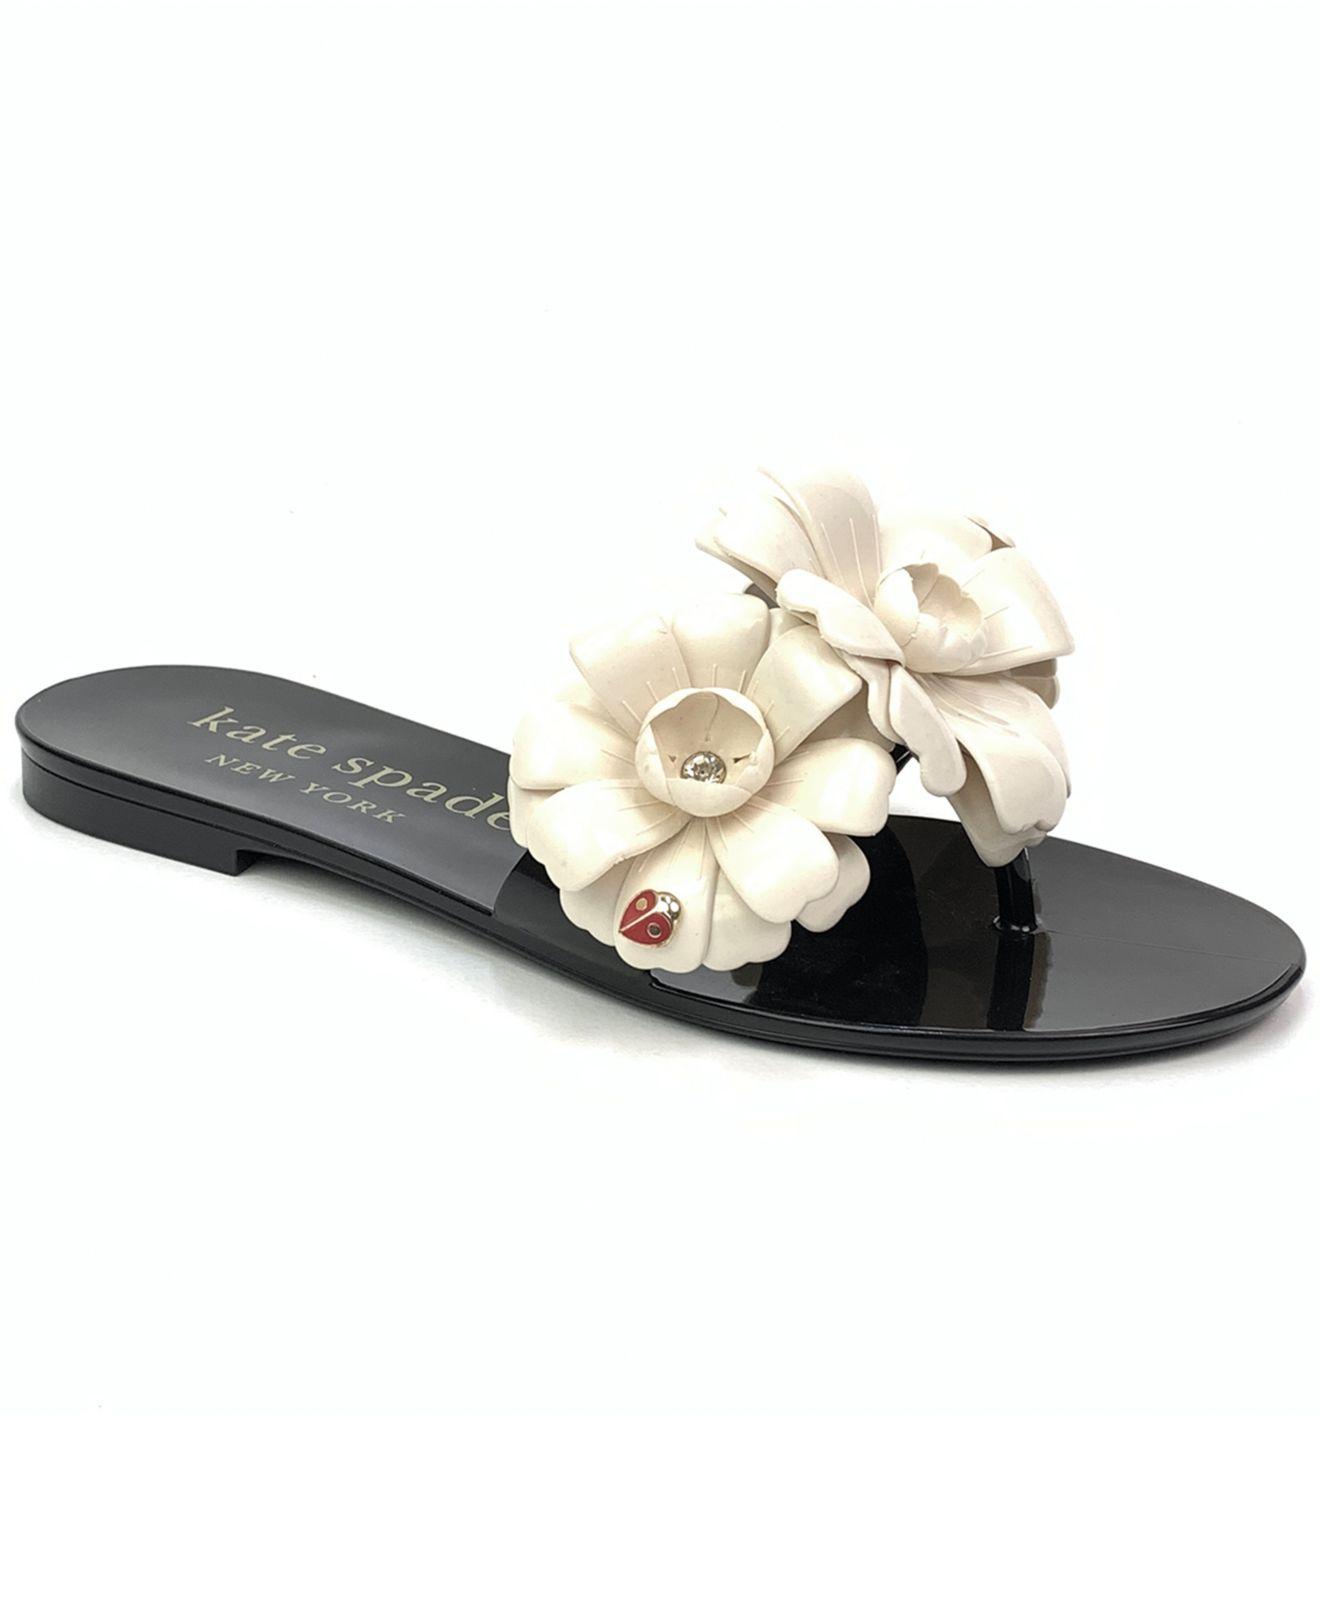 Kate Spade Rubber Jaylee Slide Sandals in Black / French Cream 